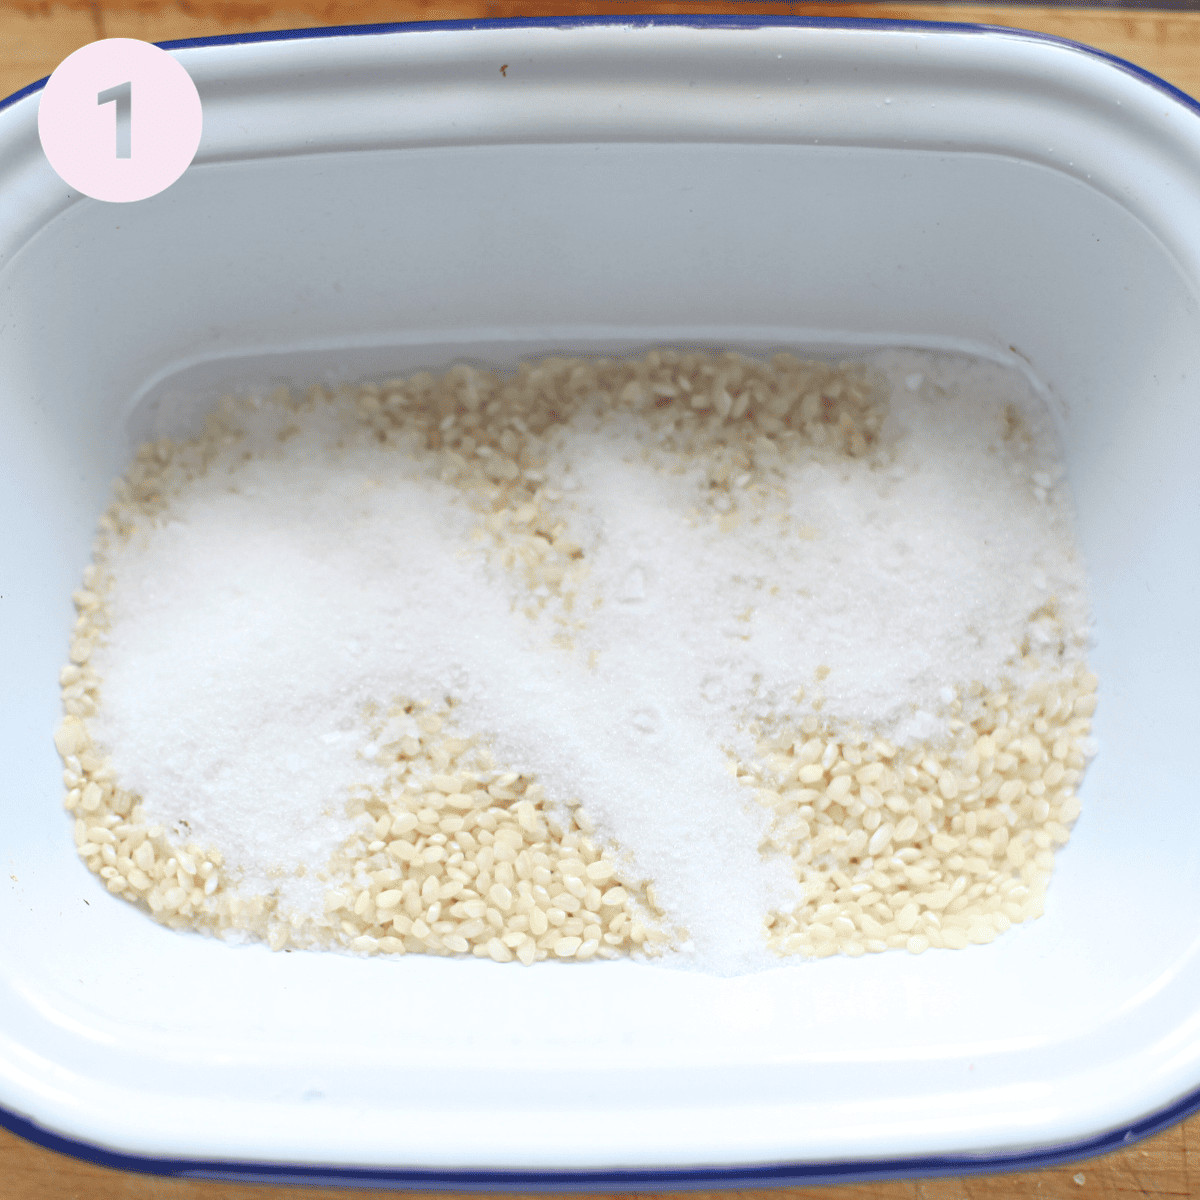 Adding rice to a baking dish.